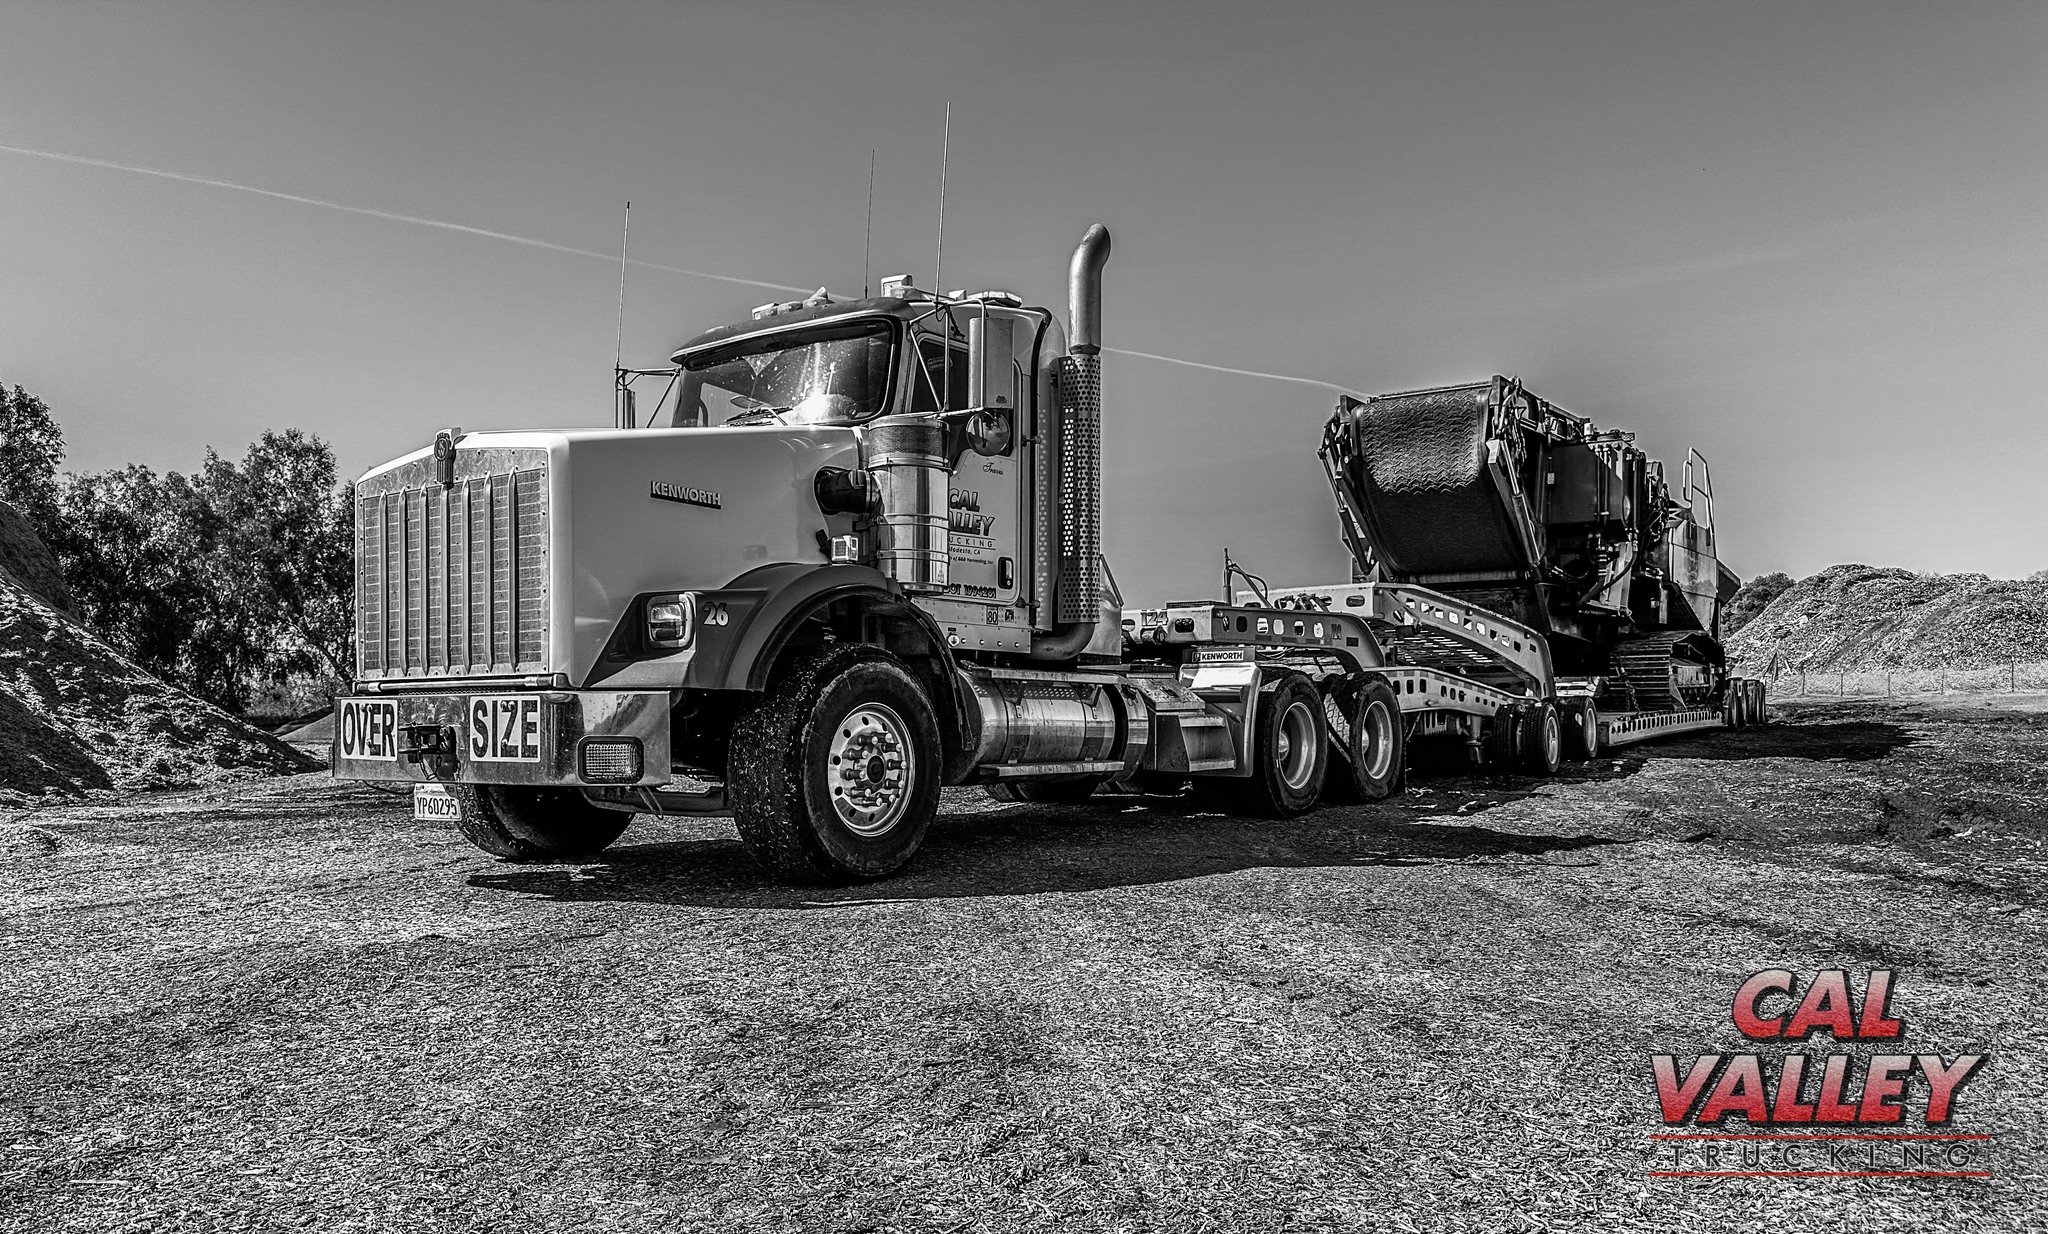 209-545-8300 is your number to call for heavy haul!

#calvalleytrucking #kenworth #heavyhaul  #grinder #murraytrailer #california #trucking 
#wearecalvalley